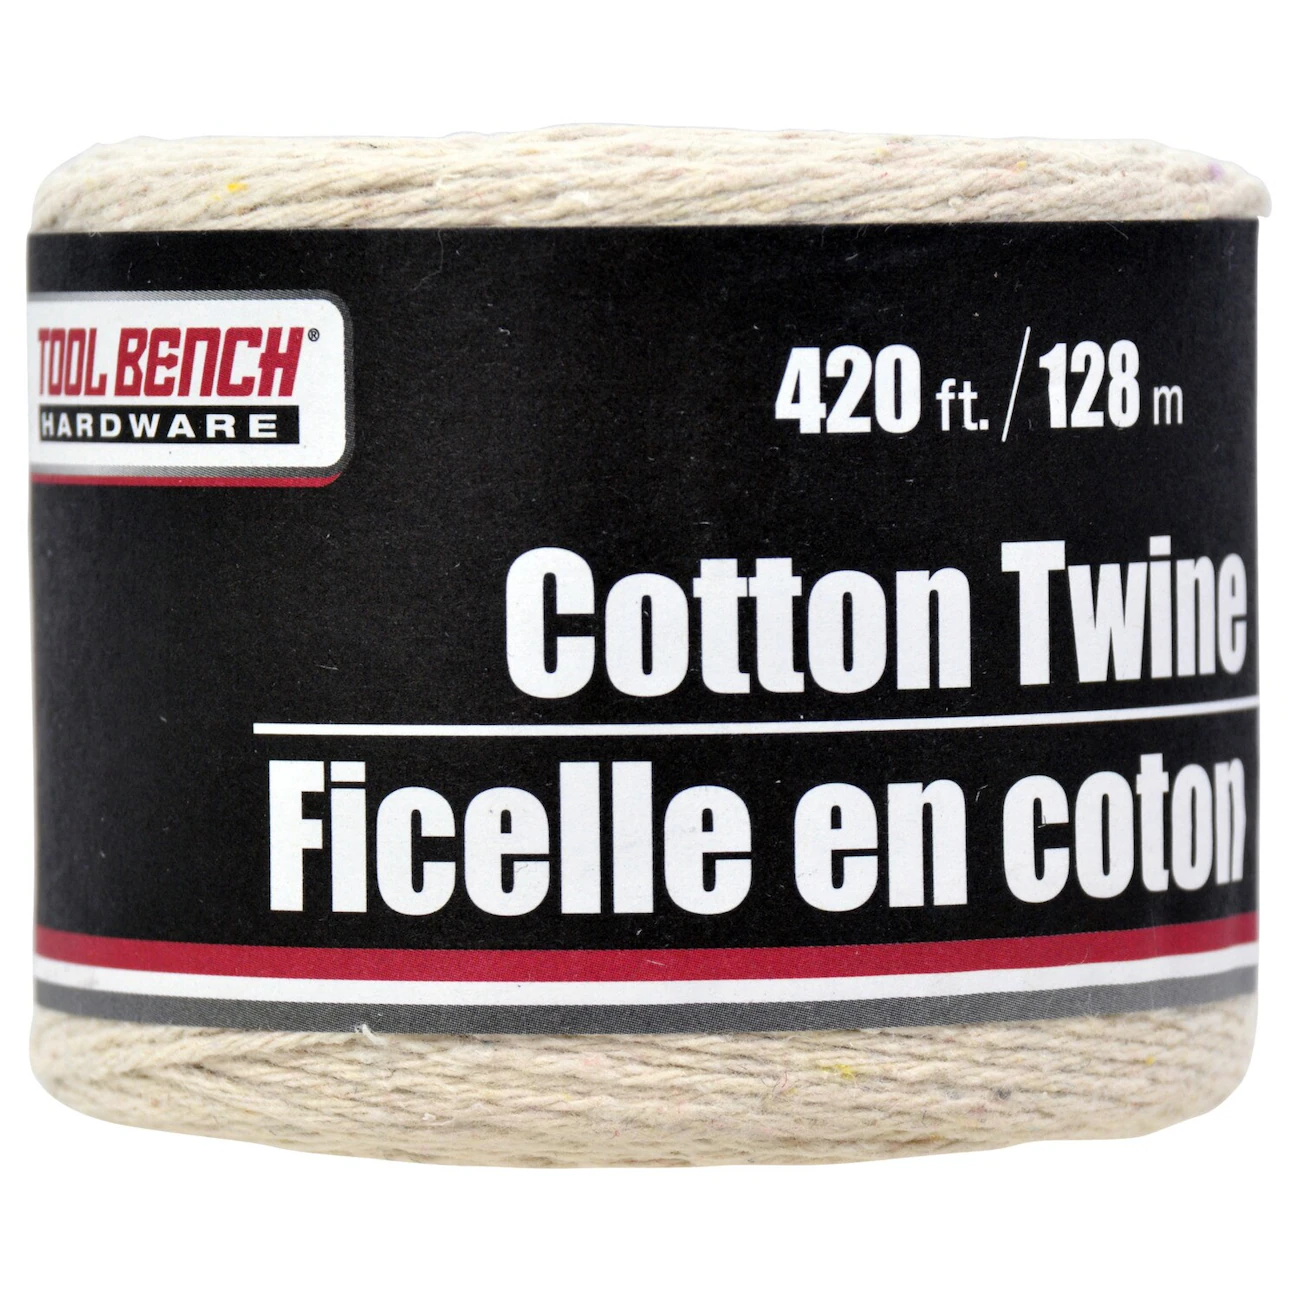 Cotton Twine